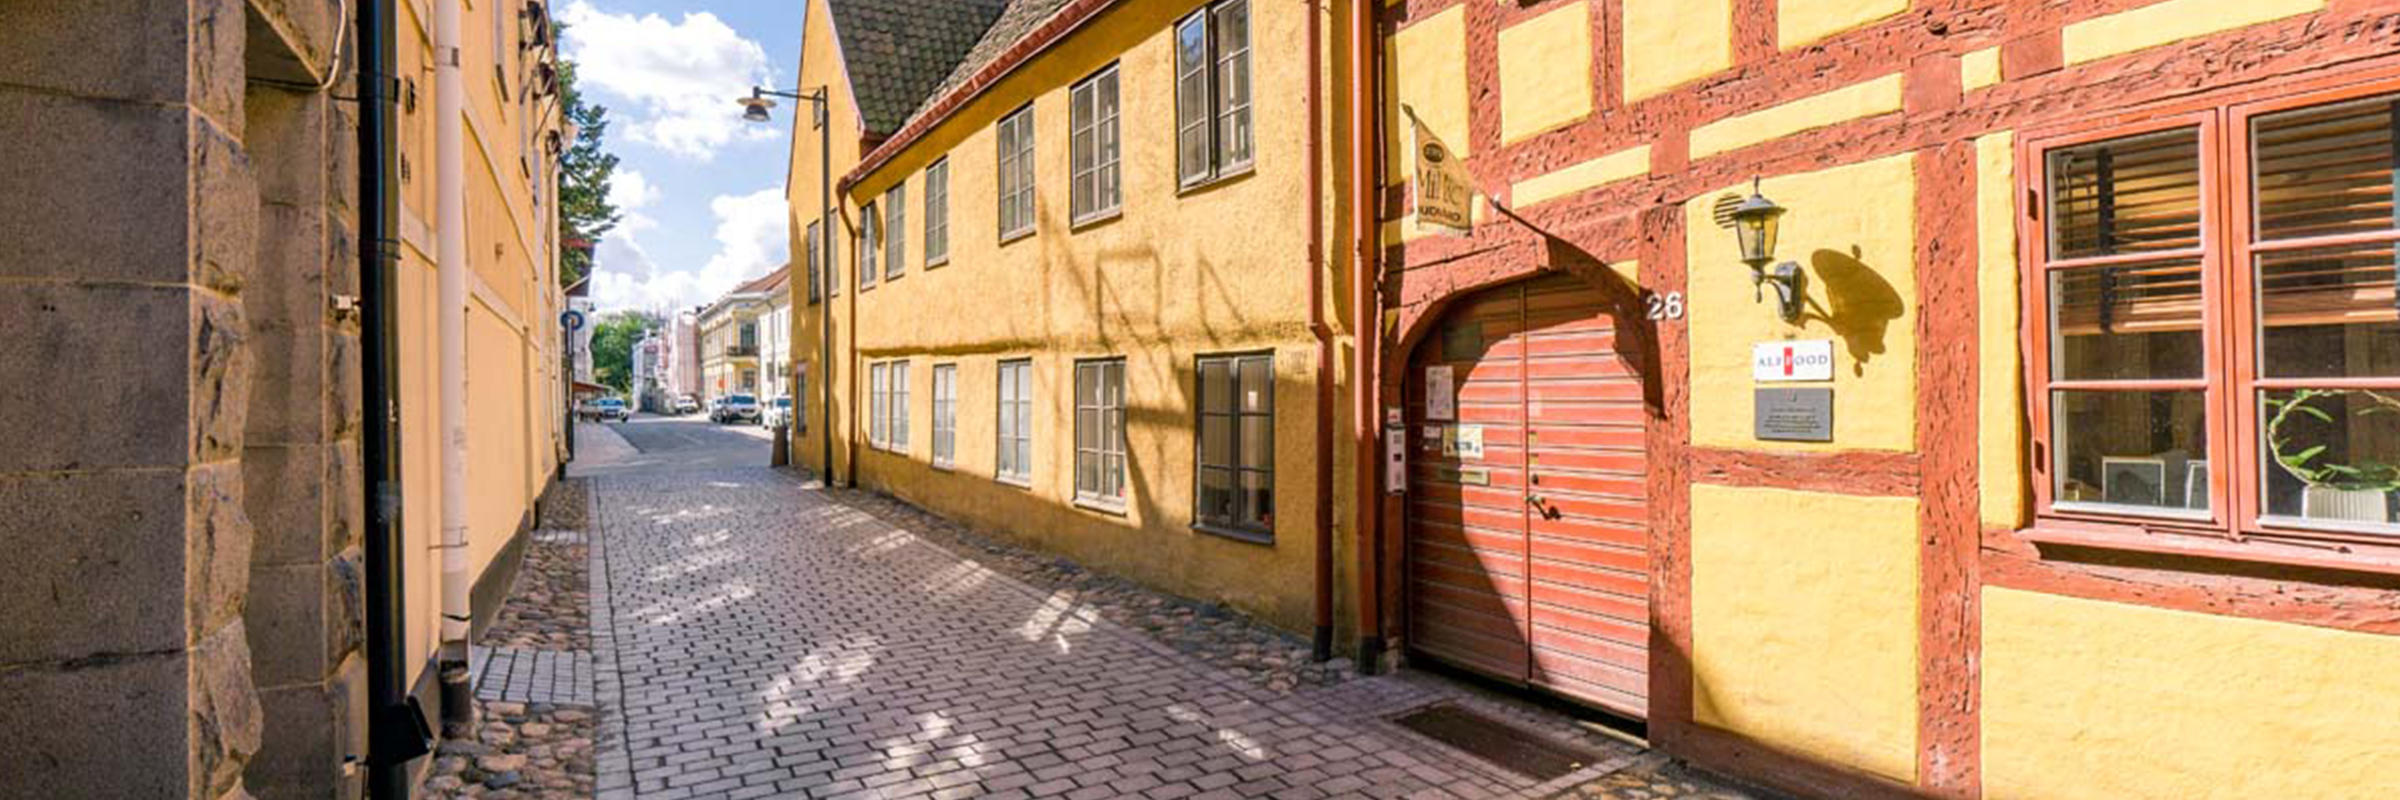 Gata i centrala Kristianstad